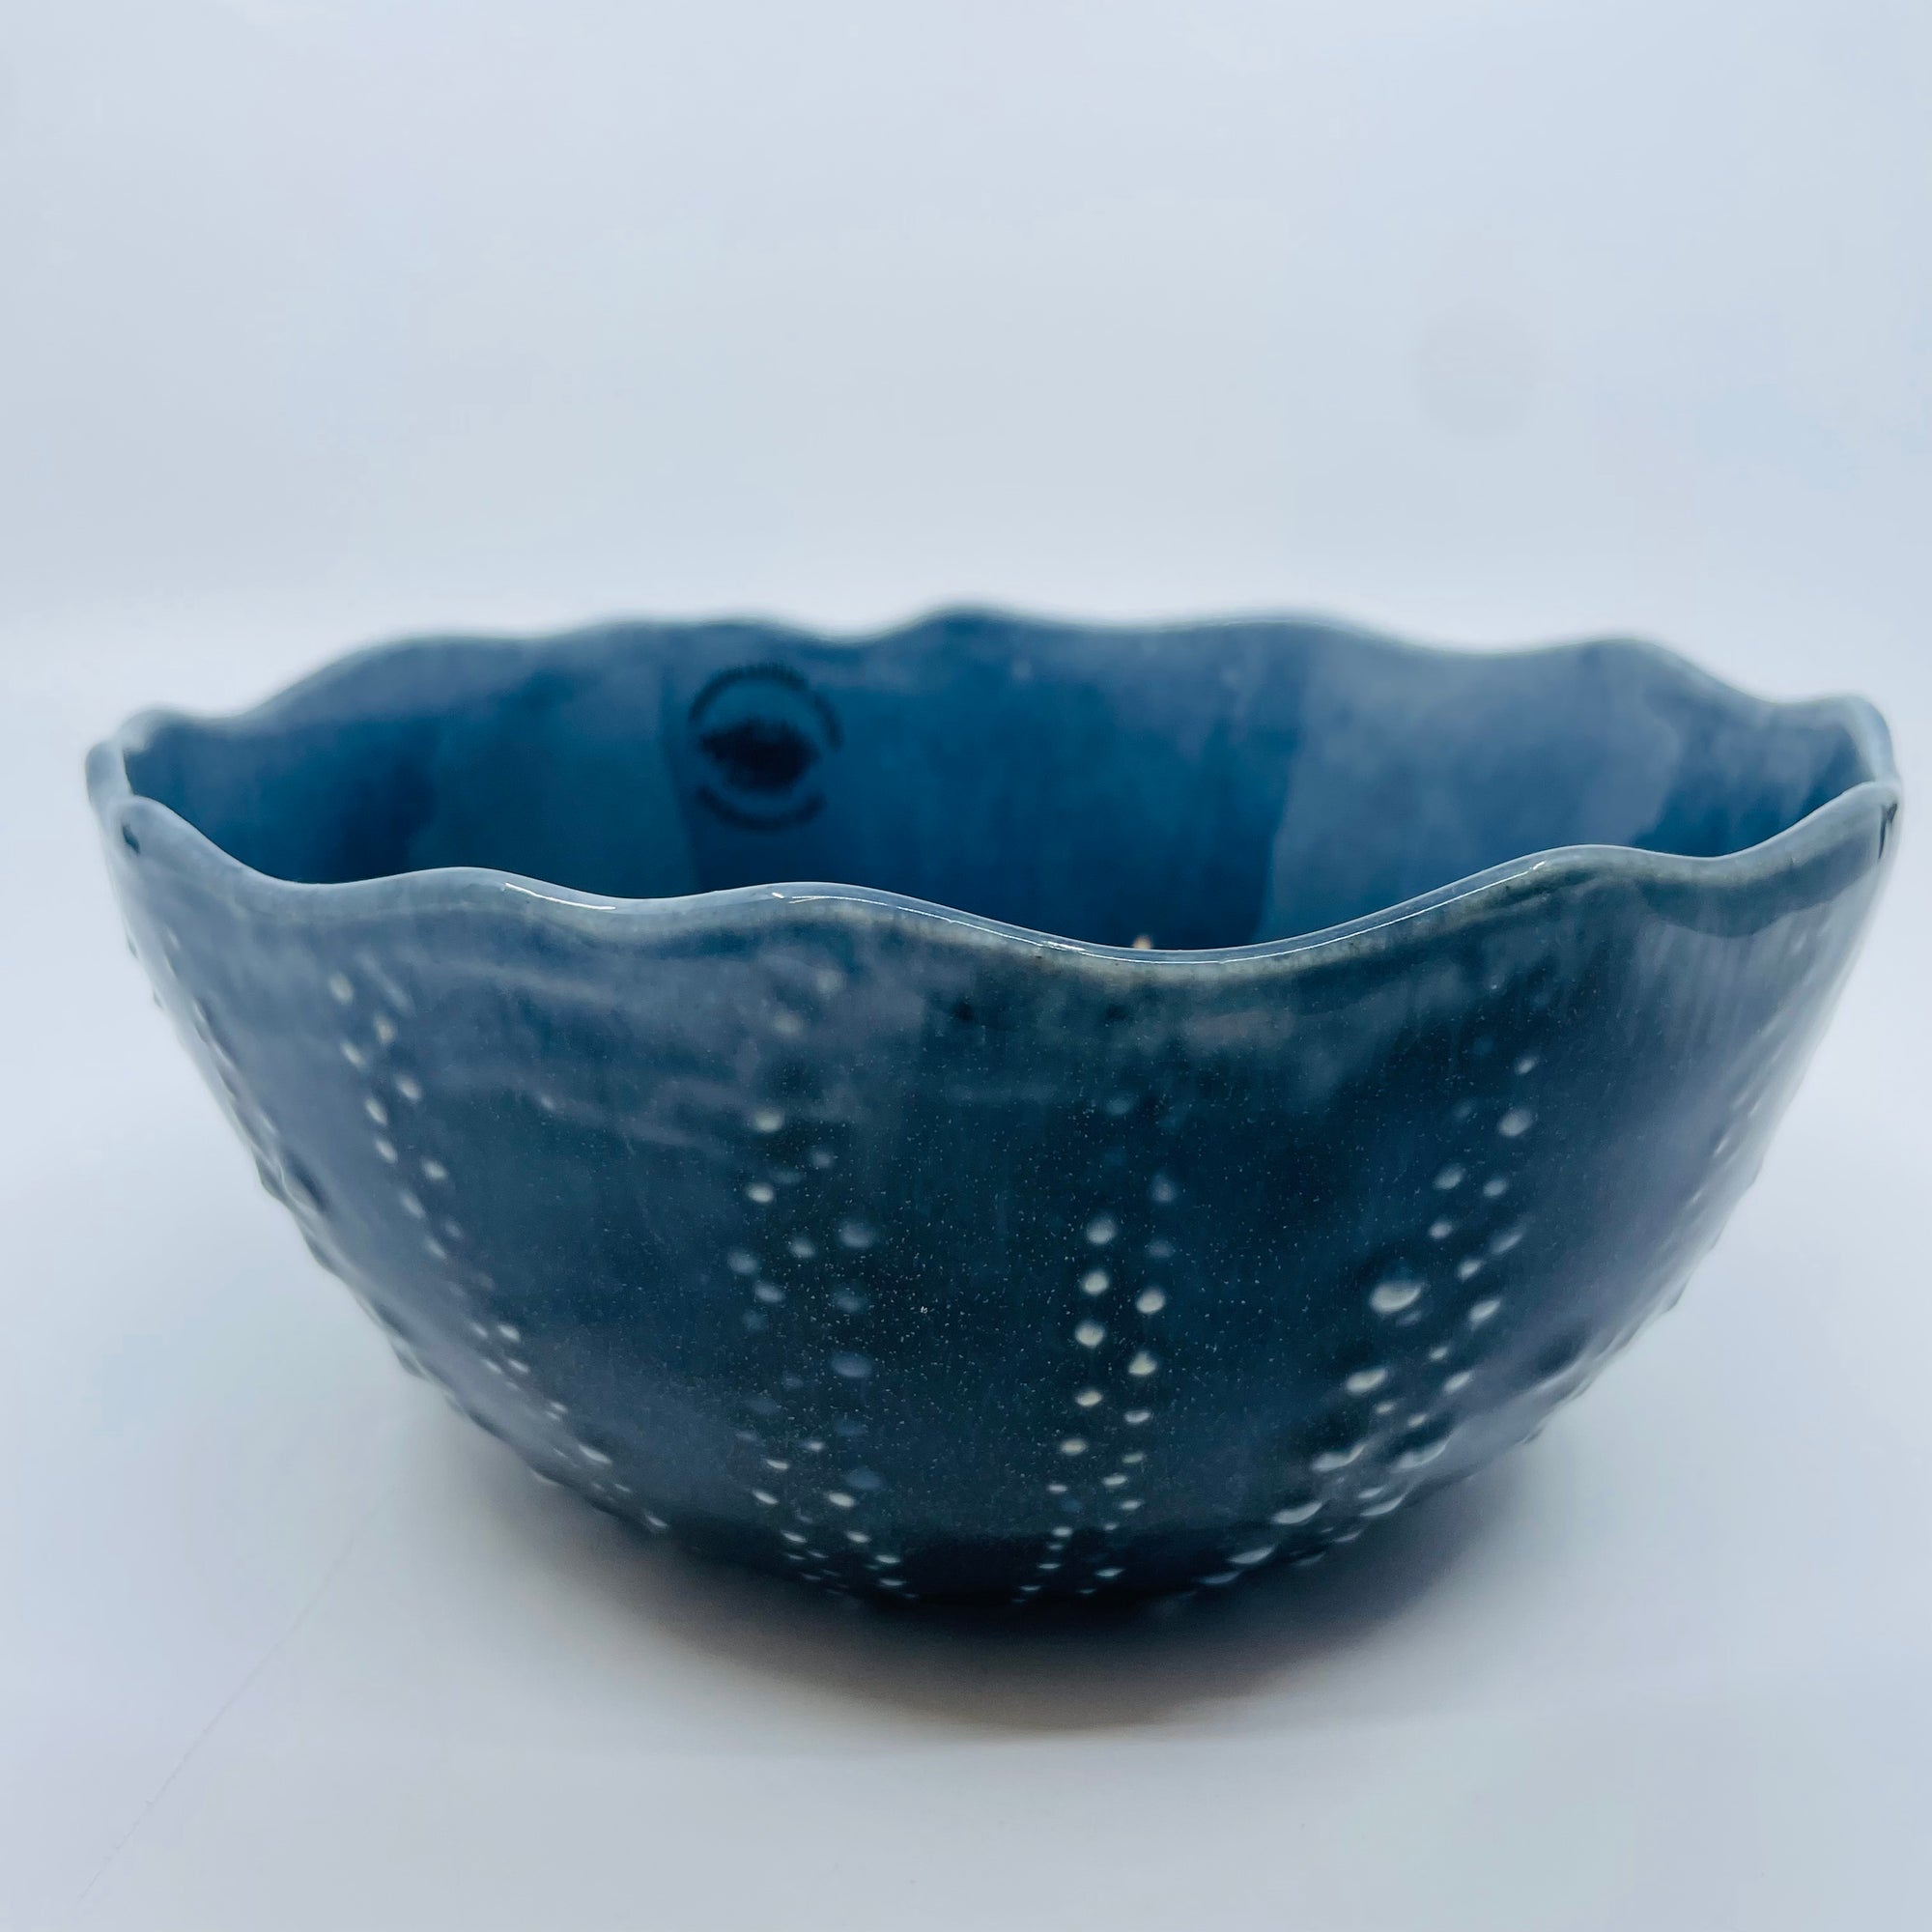 Urchin Bowl Blue - Large - URCHIN Large B-1 - House of Himwitsa Native Art Gallery and Gifts